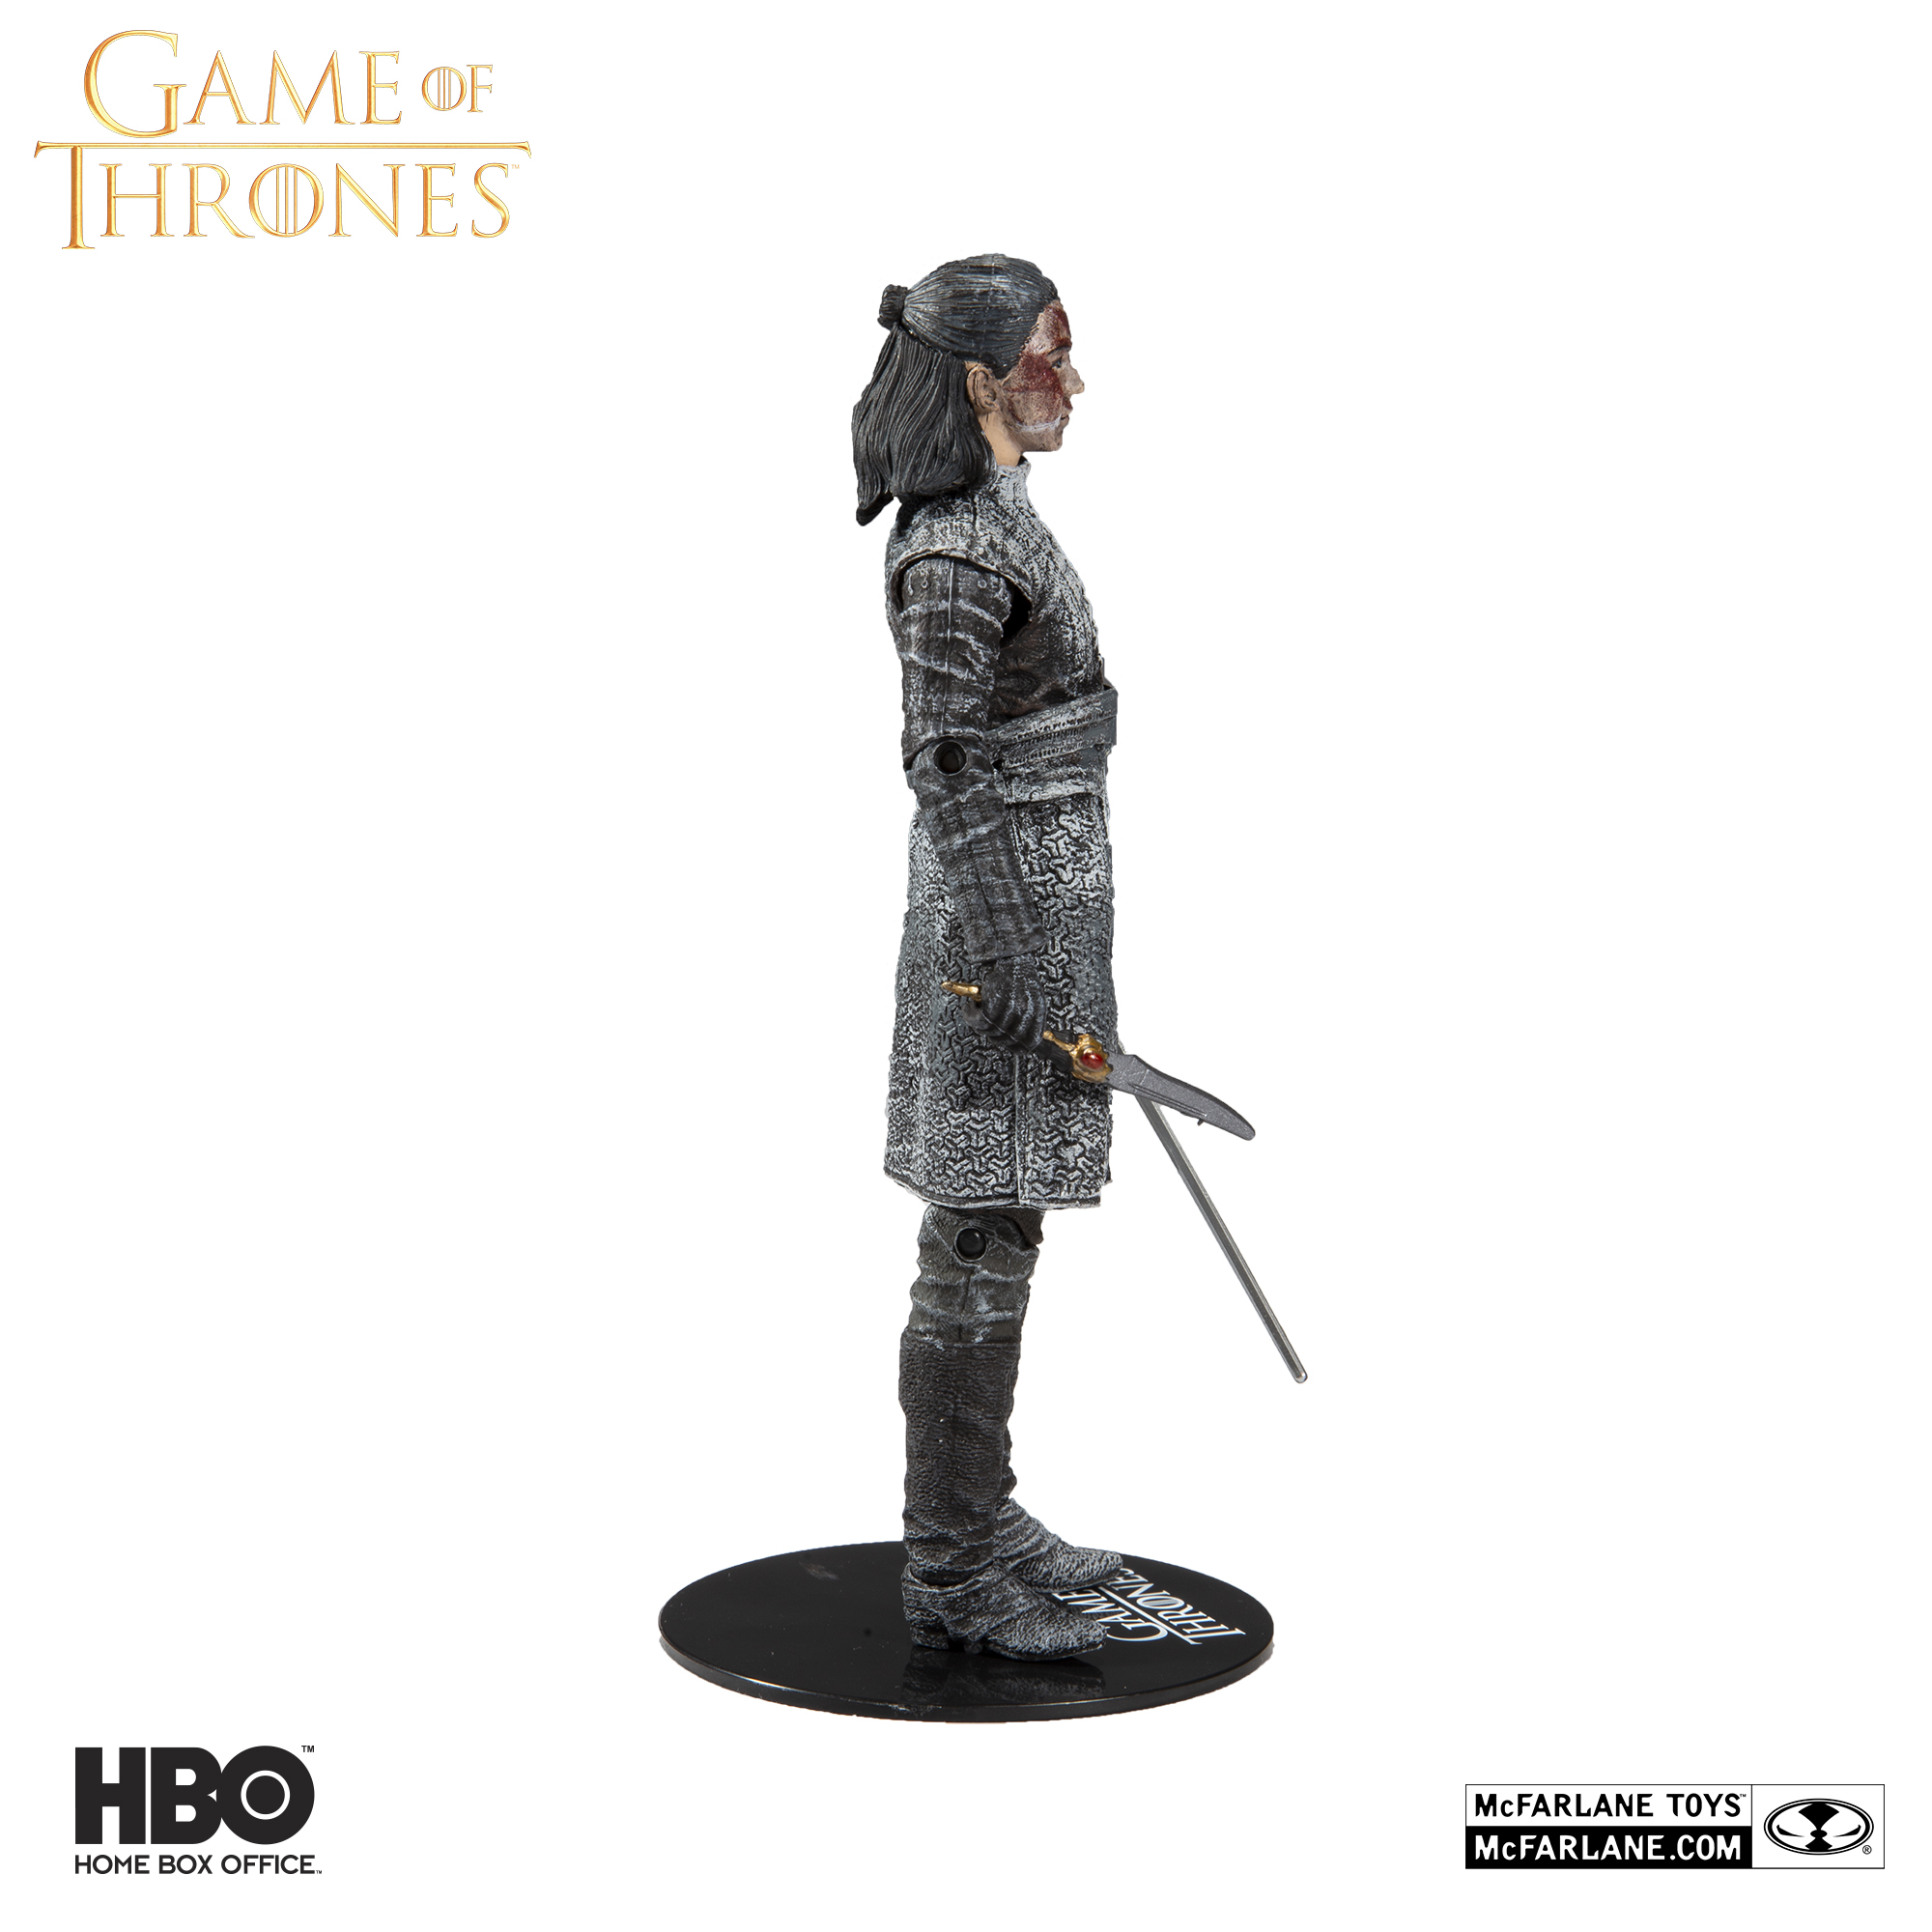 McFarlane Toys Game of Thrones Series 1 Arya Stark 6 Inch Figure for sale online